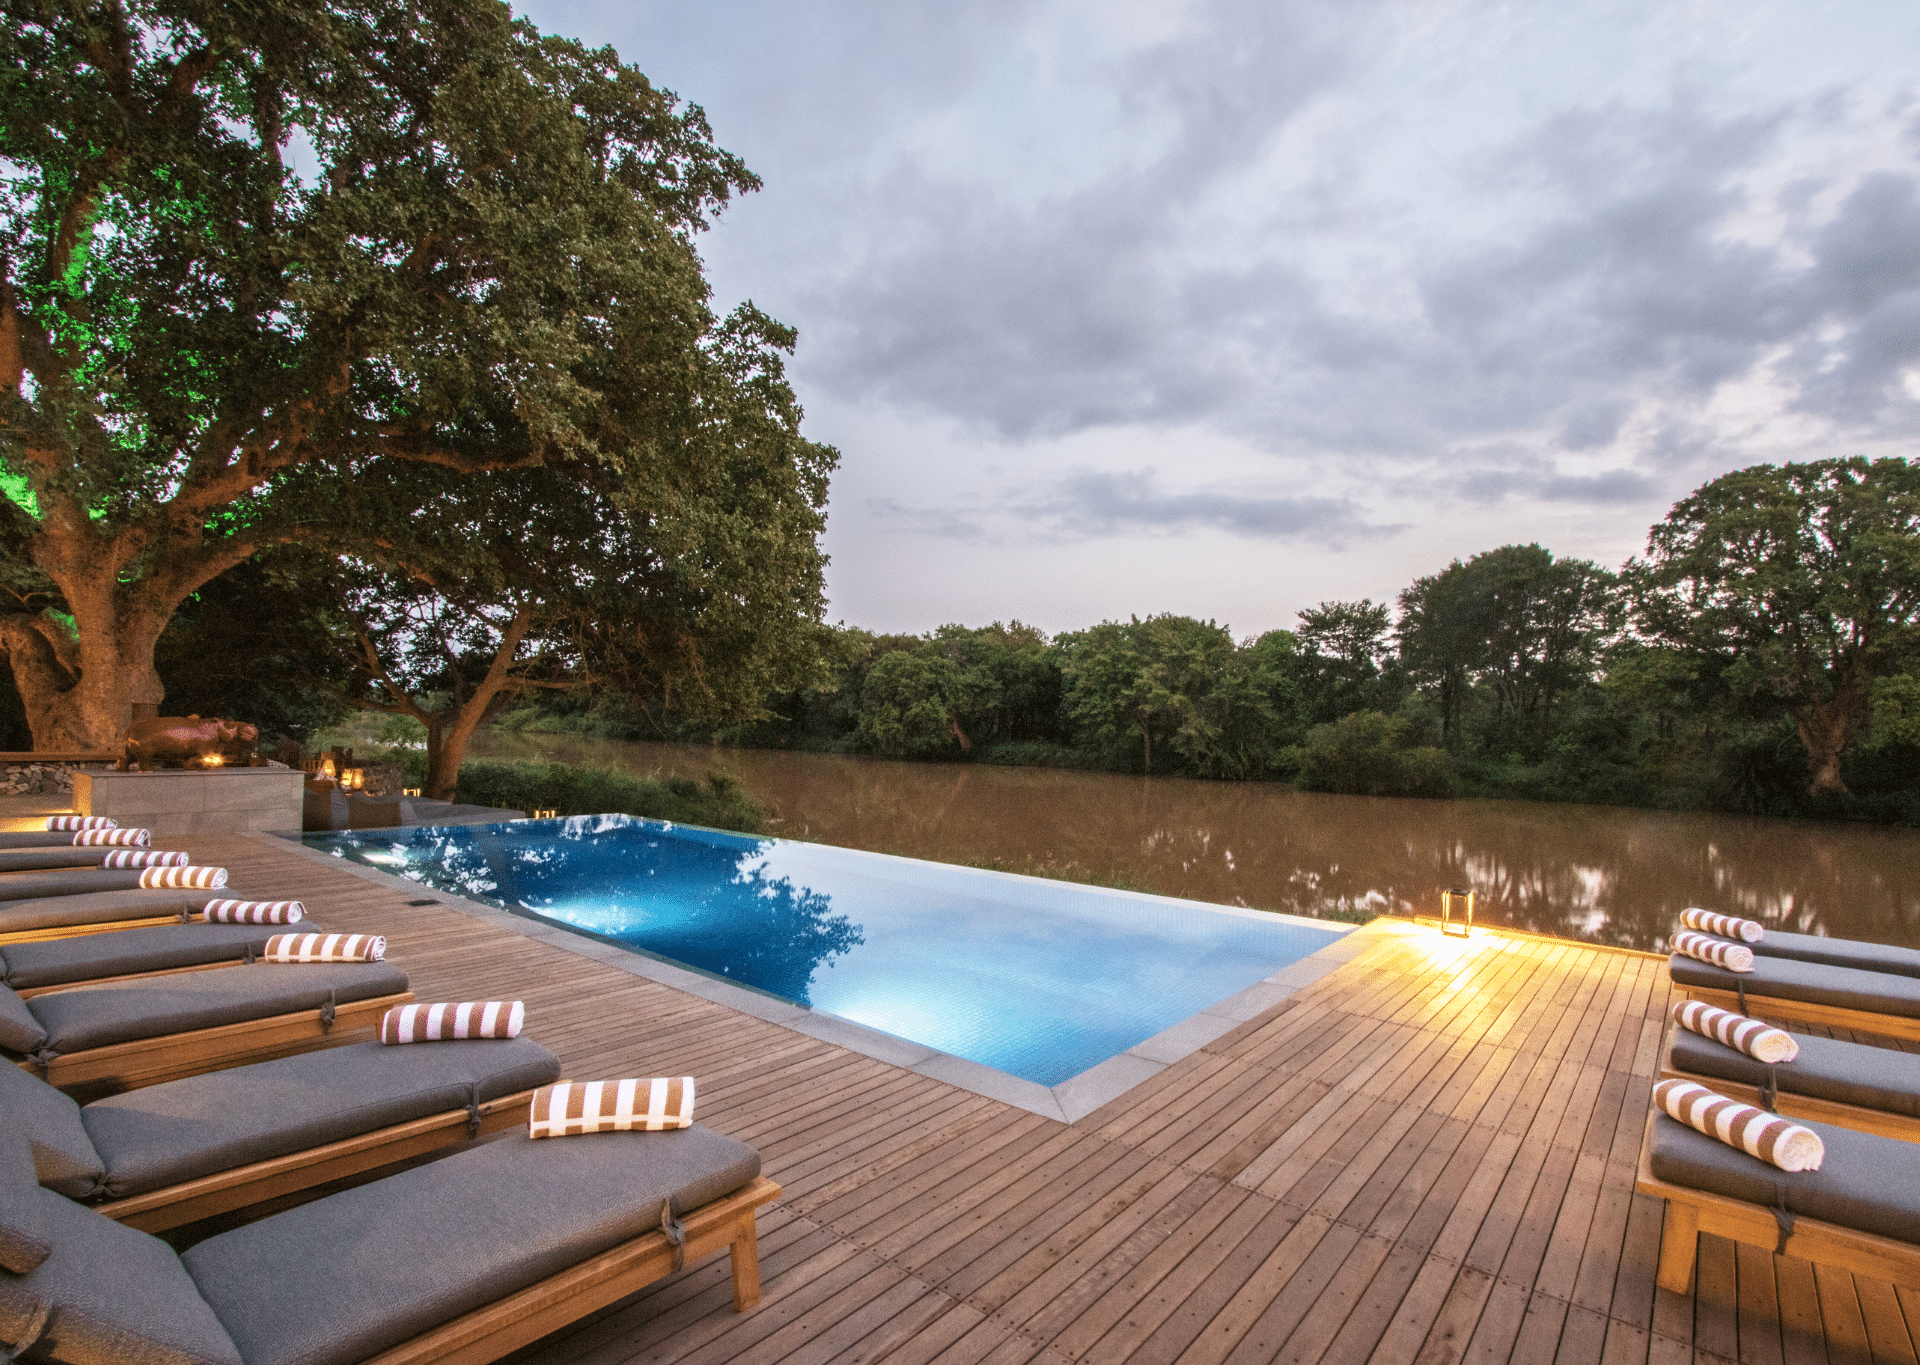 Abelana Game Lodge Pool deck on Selati River near Kruger National Park